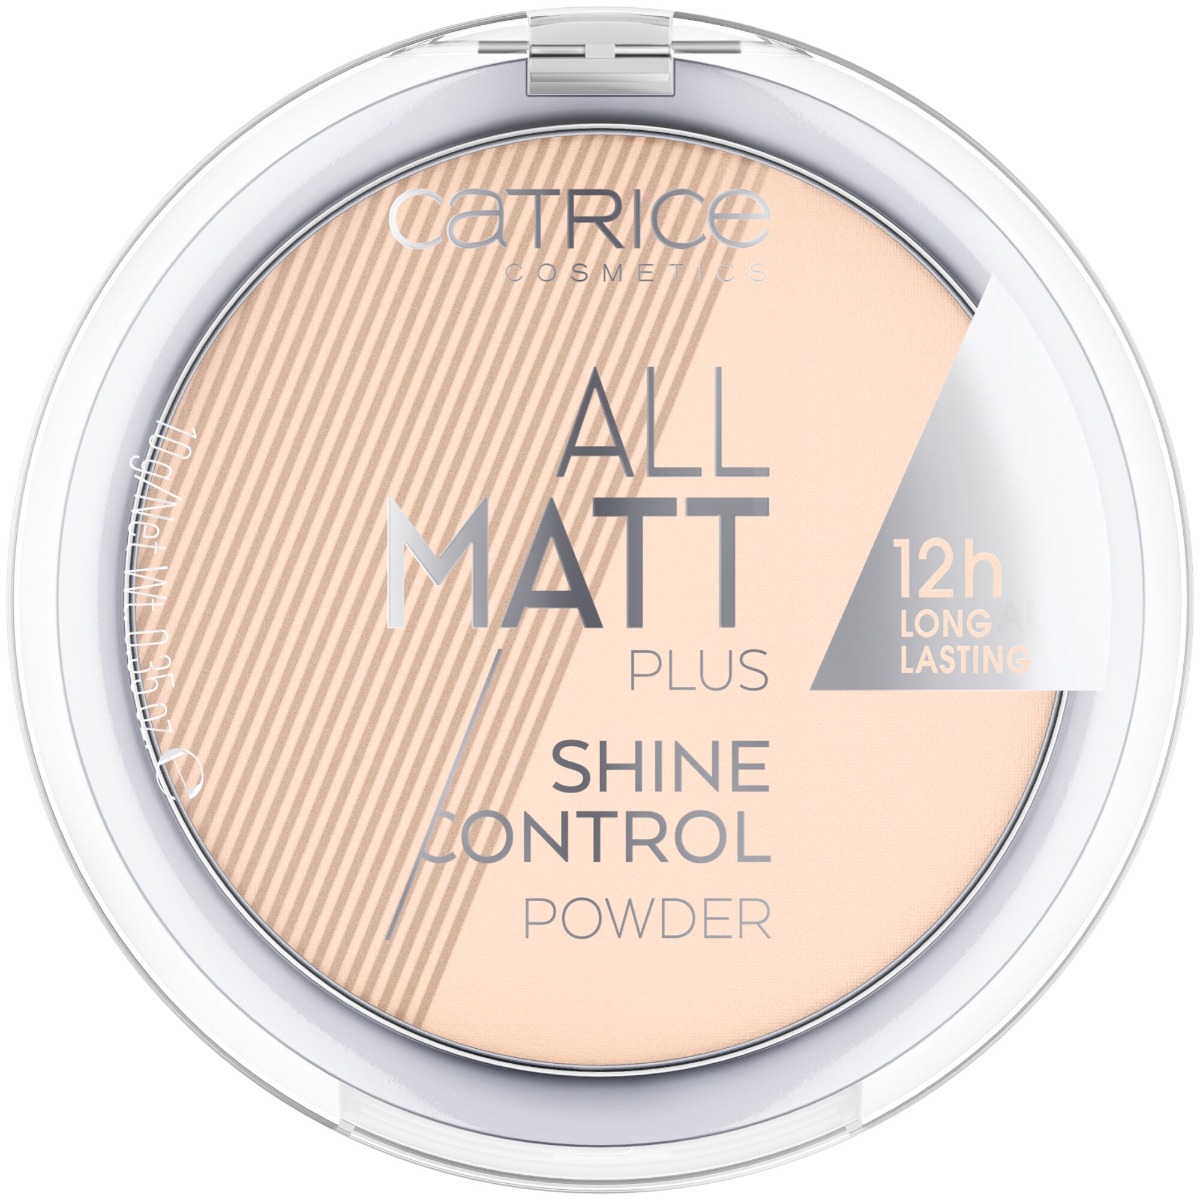 Pudra compacta All Matt Plus Shine Control Powder 010 - Transparent, 10g, Catrice